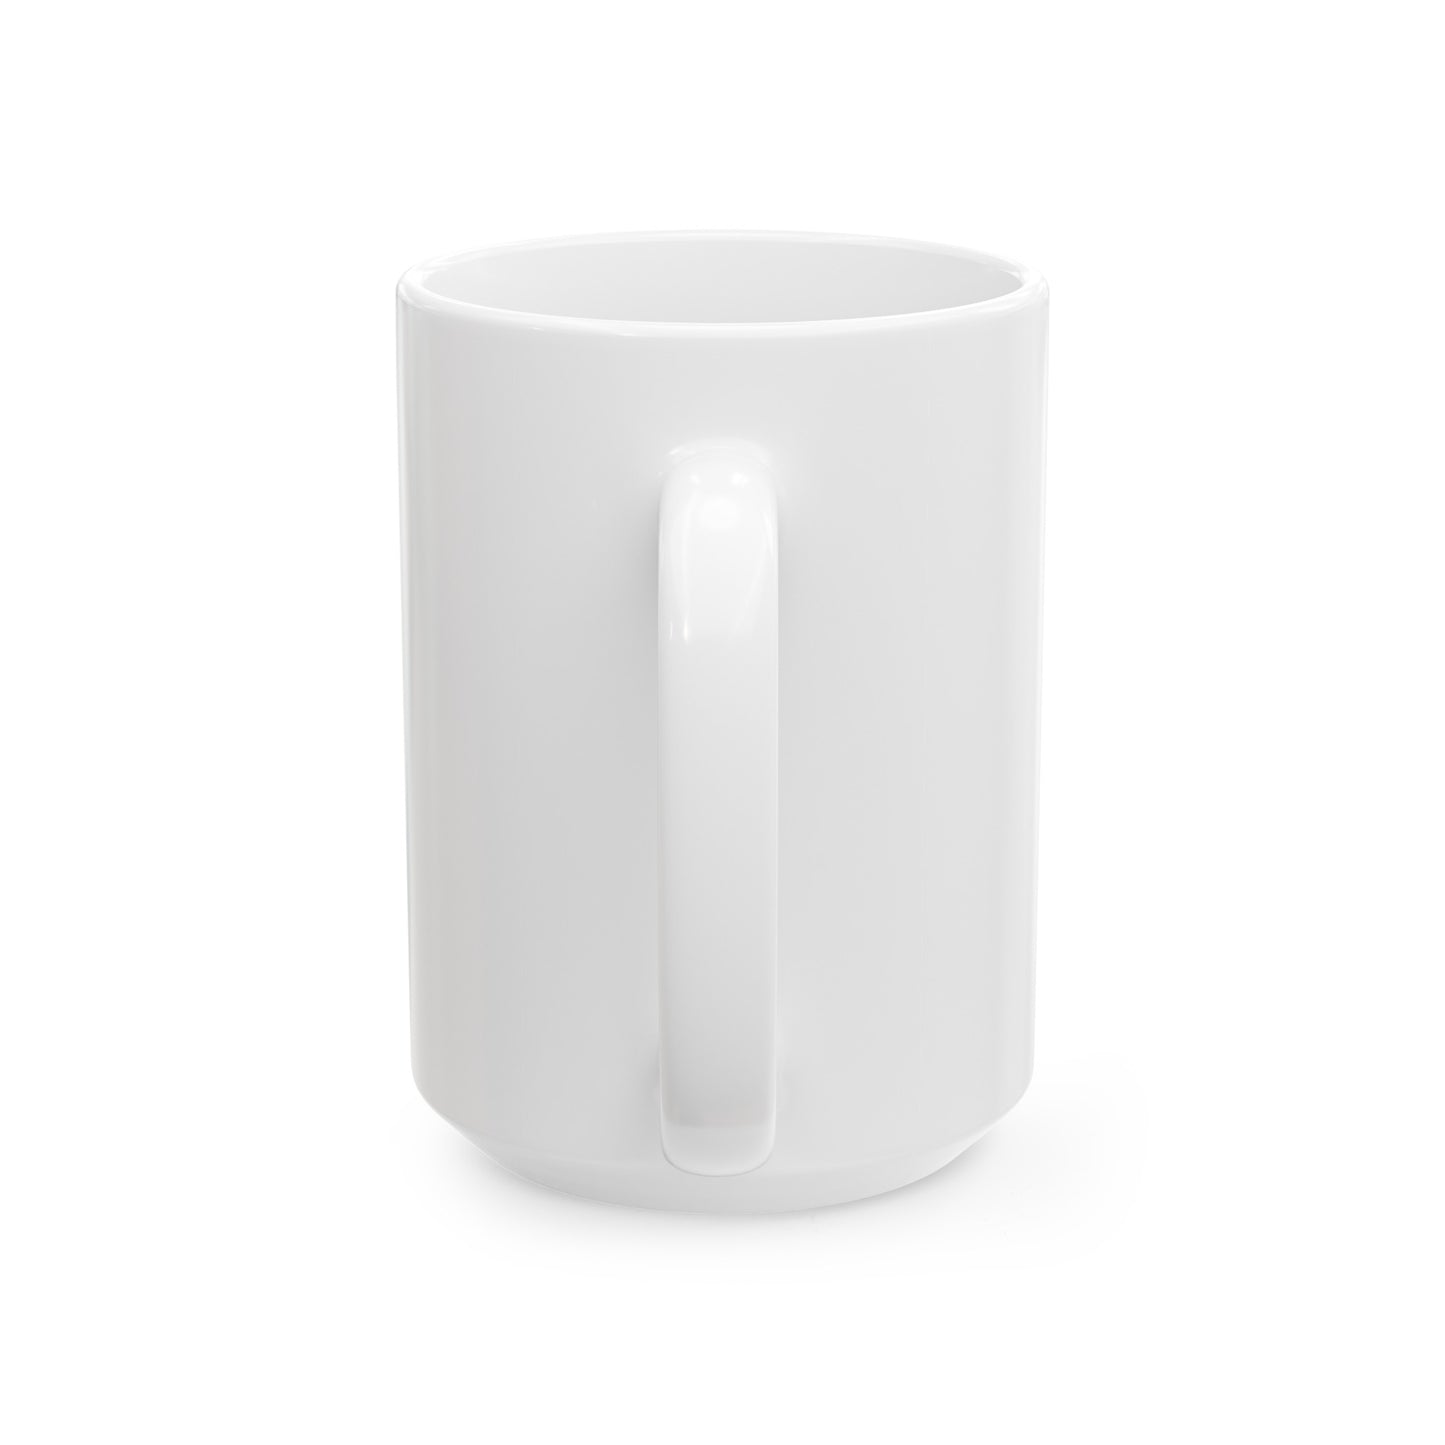 USMC MWTC (USMC) White Coffee Mug